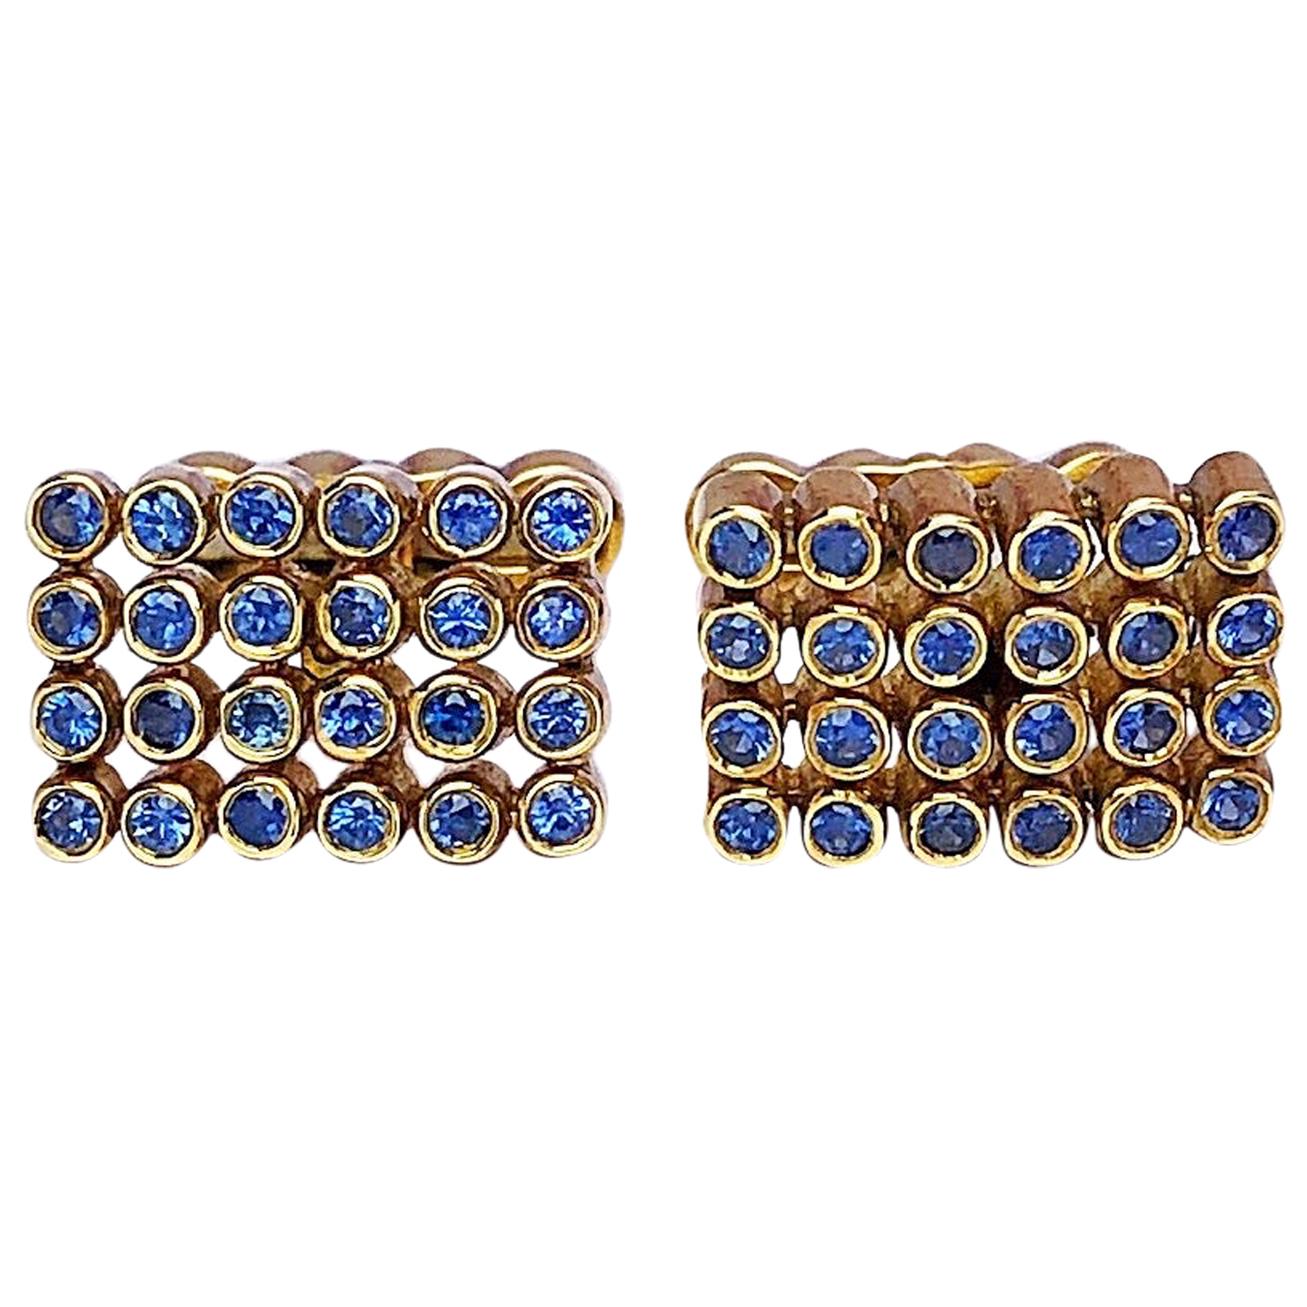 George Gero 18 Karat Gold Rectangular Cufflinks with 1.17 Carat Blue Sapphires For Sale